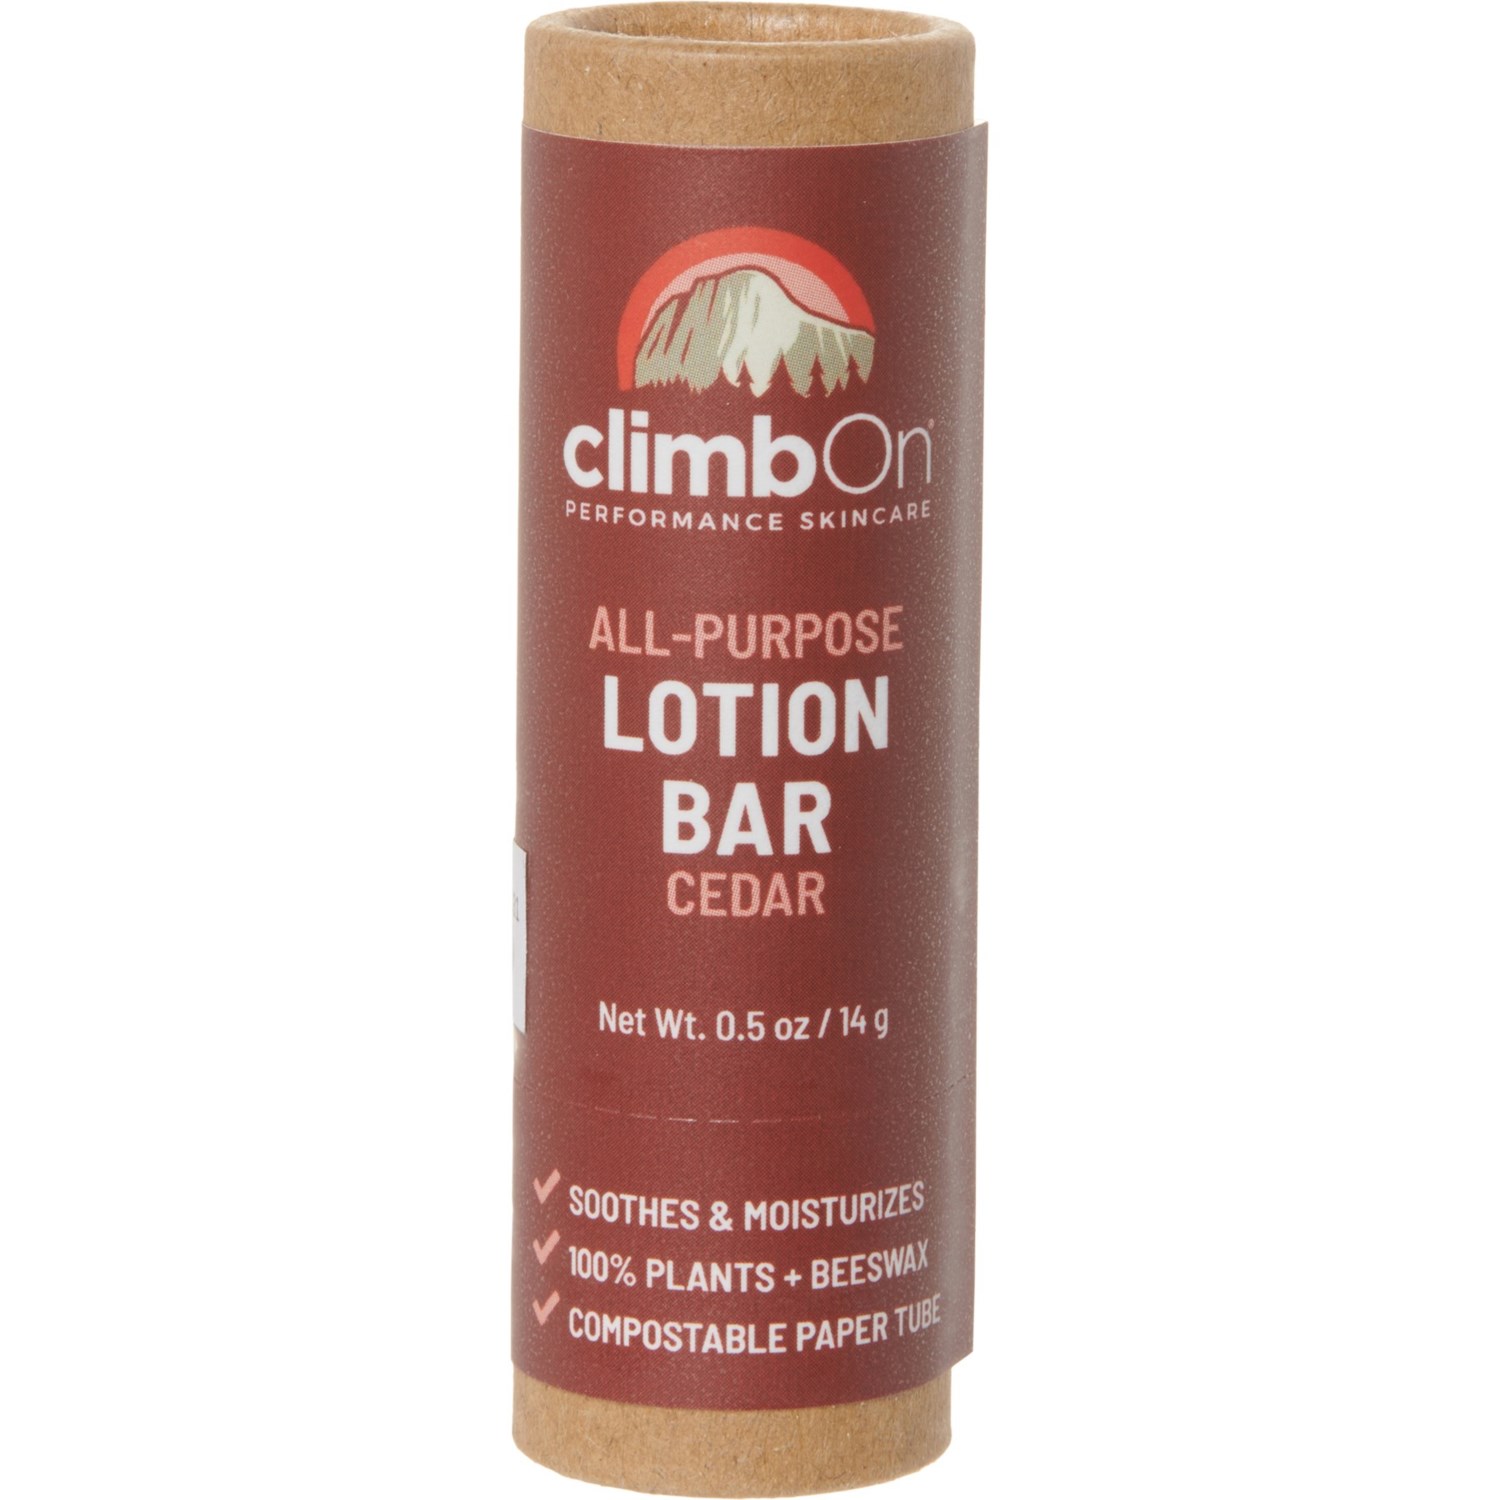 ClimbOn Cedar All-Purpose Mini Lotion Bar - 0.5 oz.